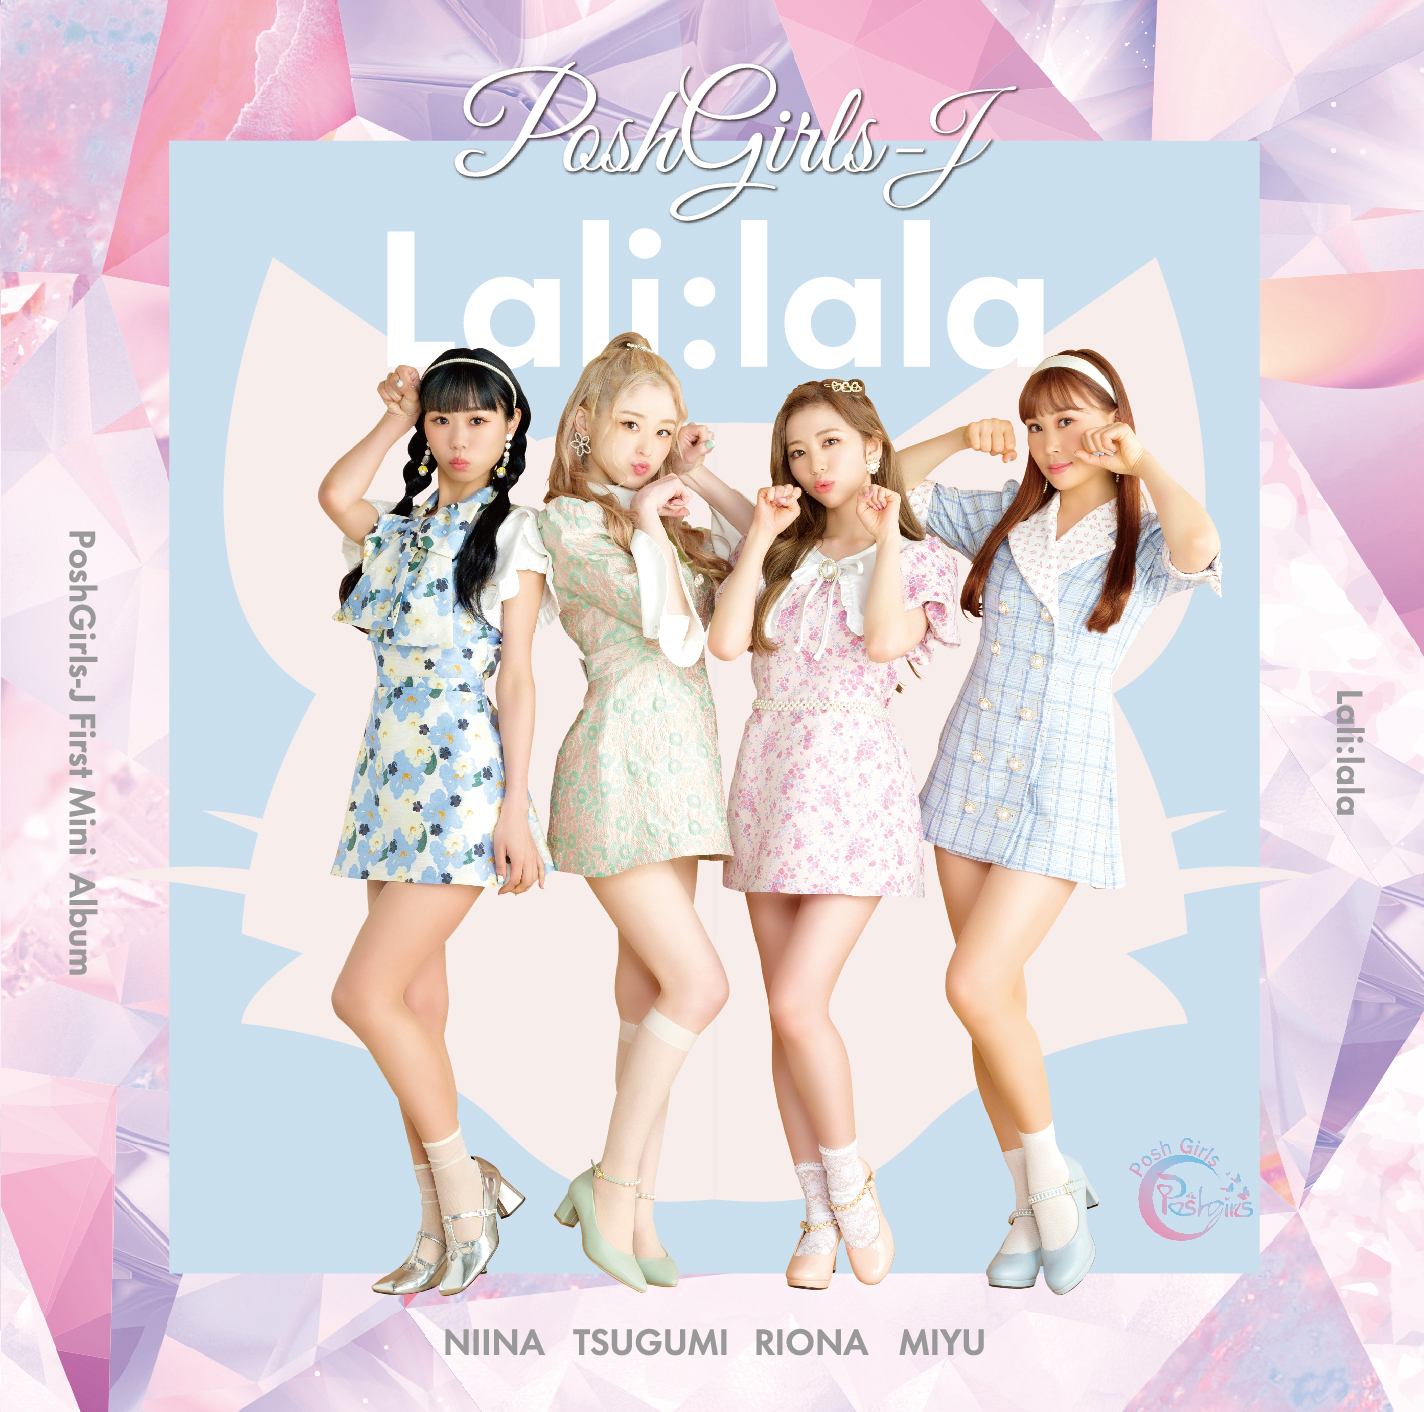 PoshGirlsの日本メンバーユニット「PoshGirls-J」 ミニアルバム『Lali:lala』6月22日発売決定！|K-POP・アジア